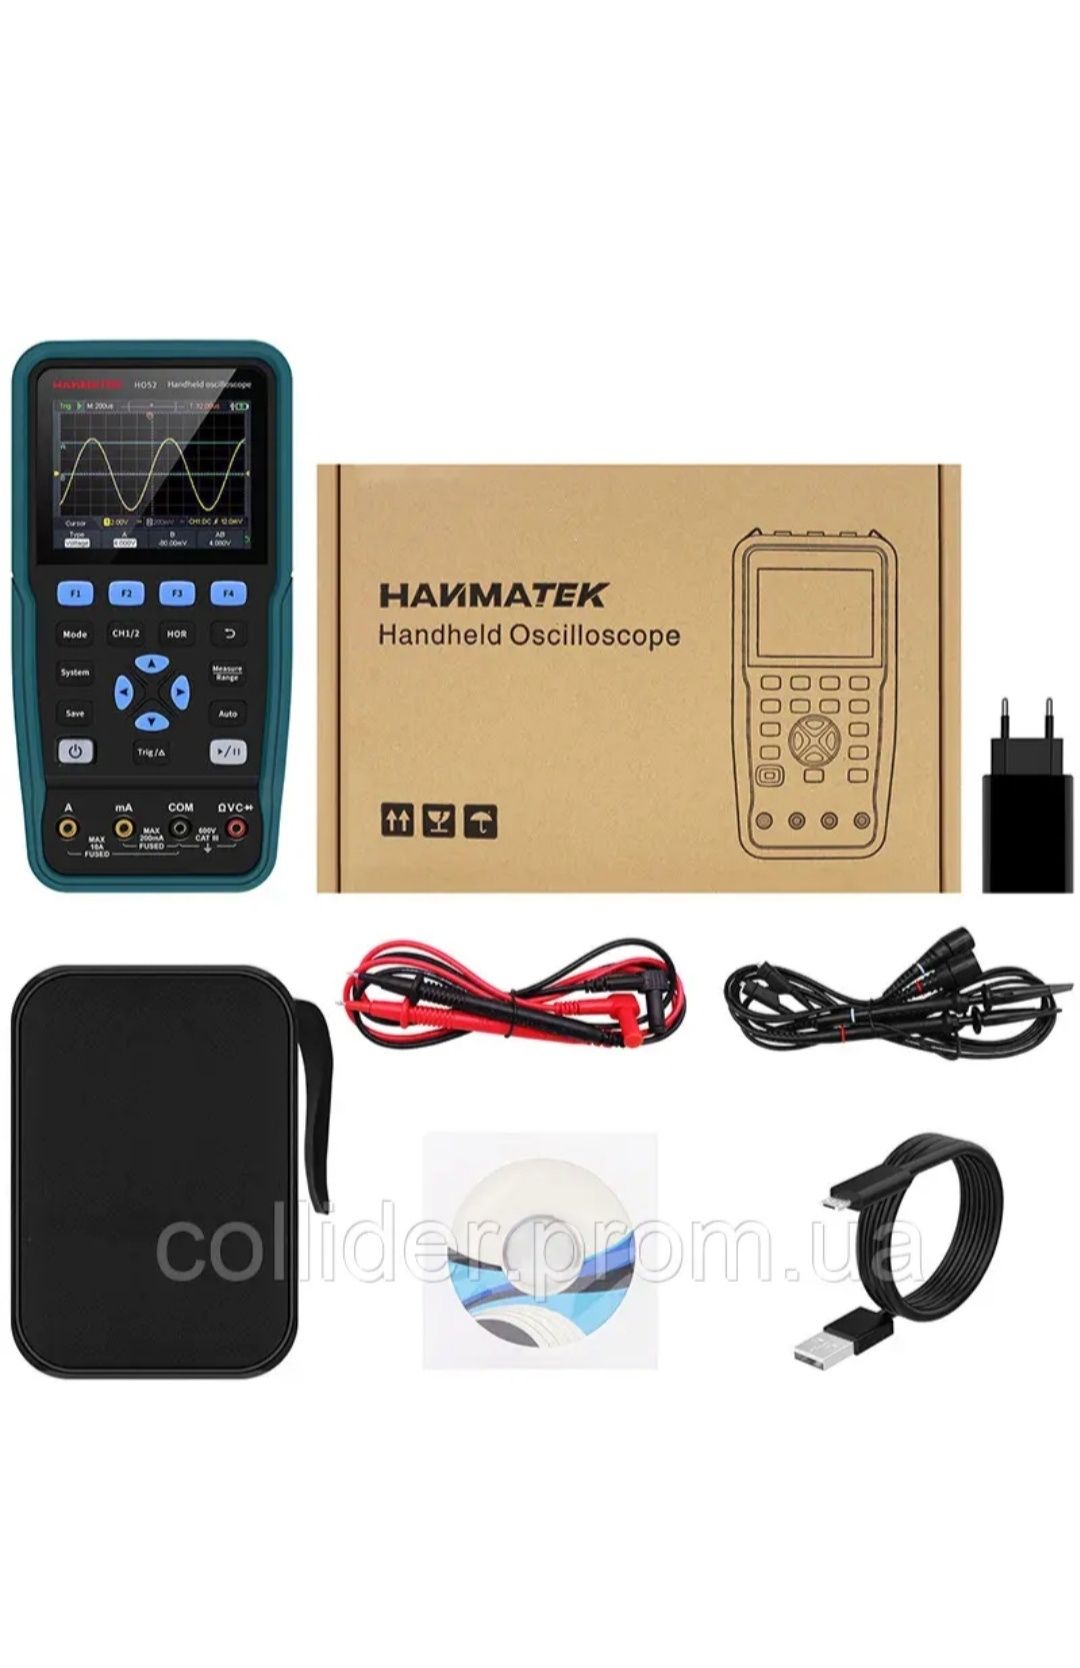 Осциллограф мультиметр HANMATEK HO52S 2 х 50 МГц, 250 МВ/с, DMM